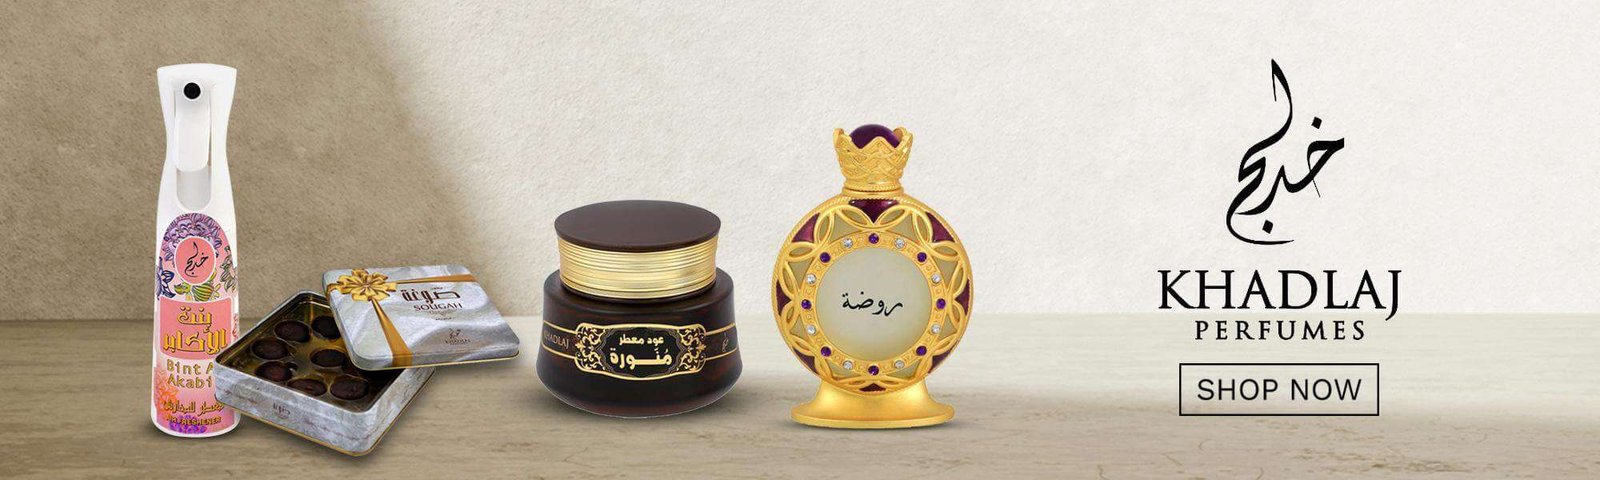 hãng tinh dầu nước hoa dubai Khadlaj perfumes banner